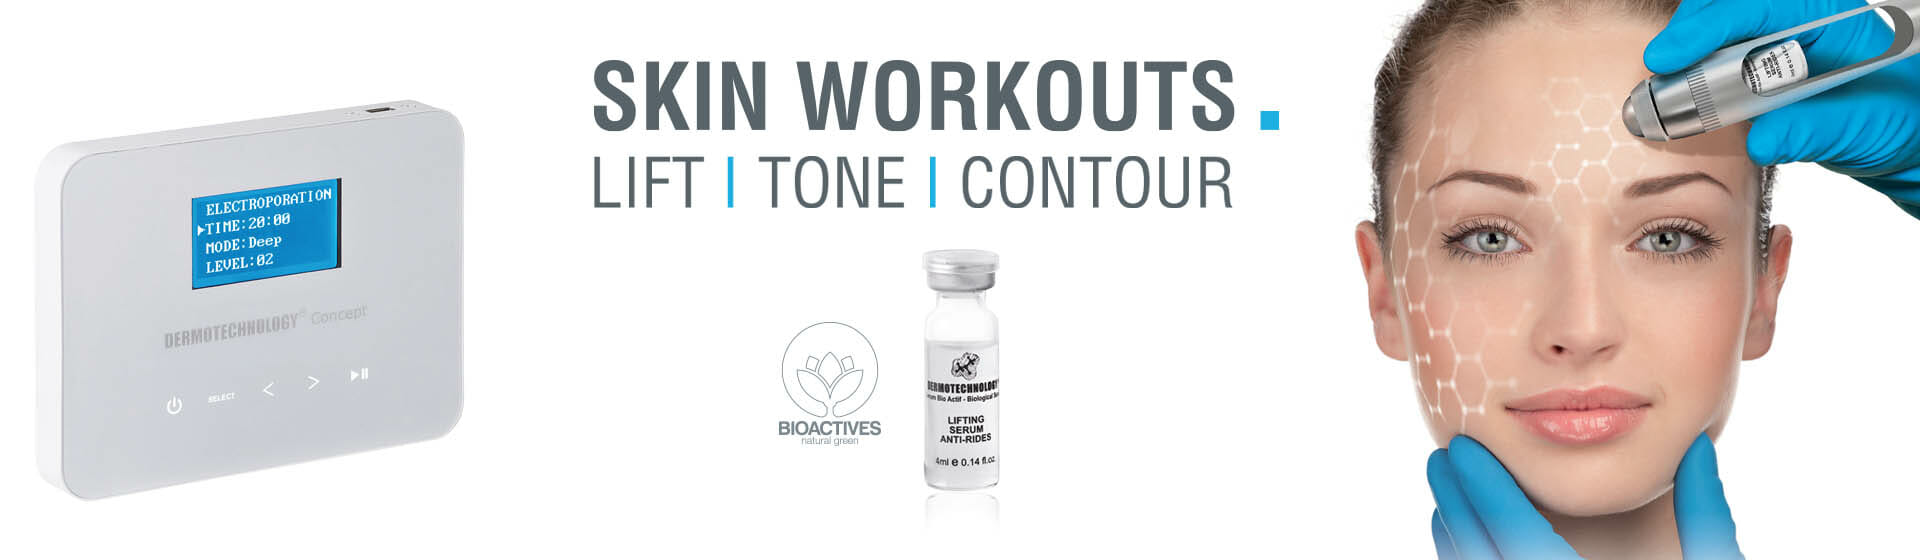 Skin workouts Lift tone contour